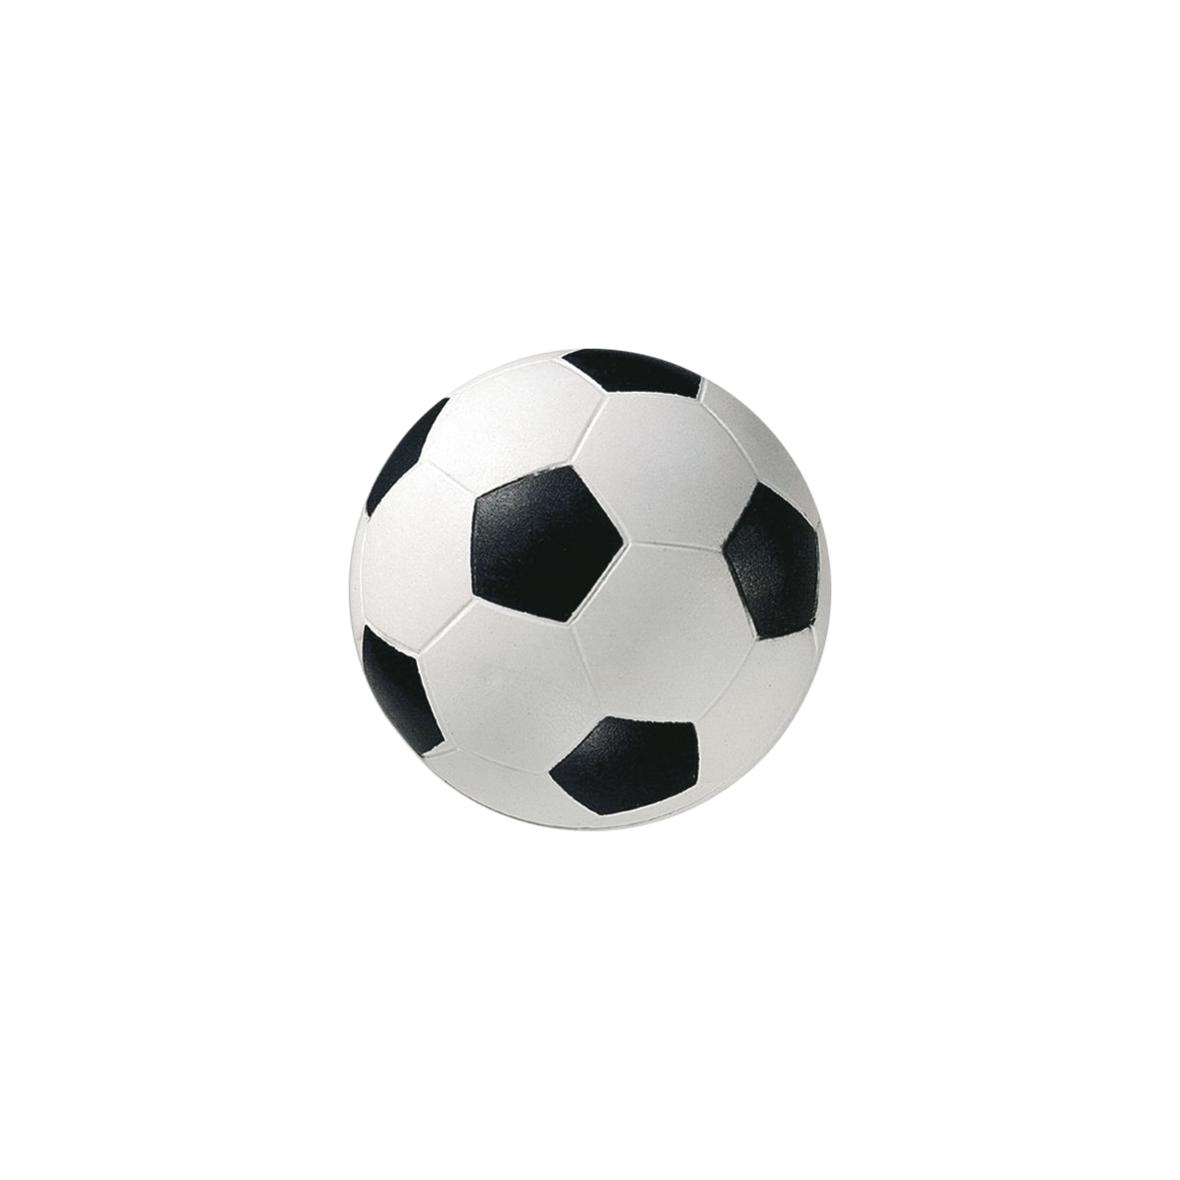 Balle rebondissante personnalisée type football - Alix - Zaprinta France